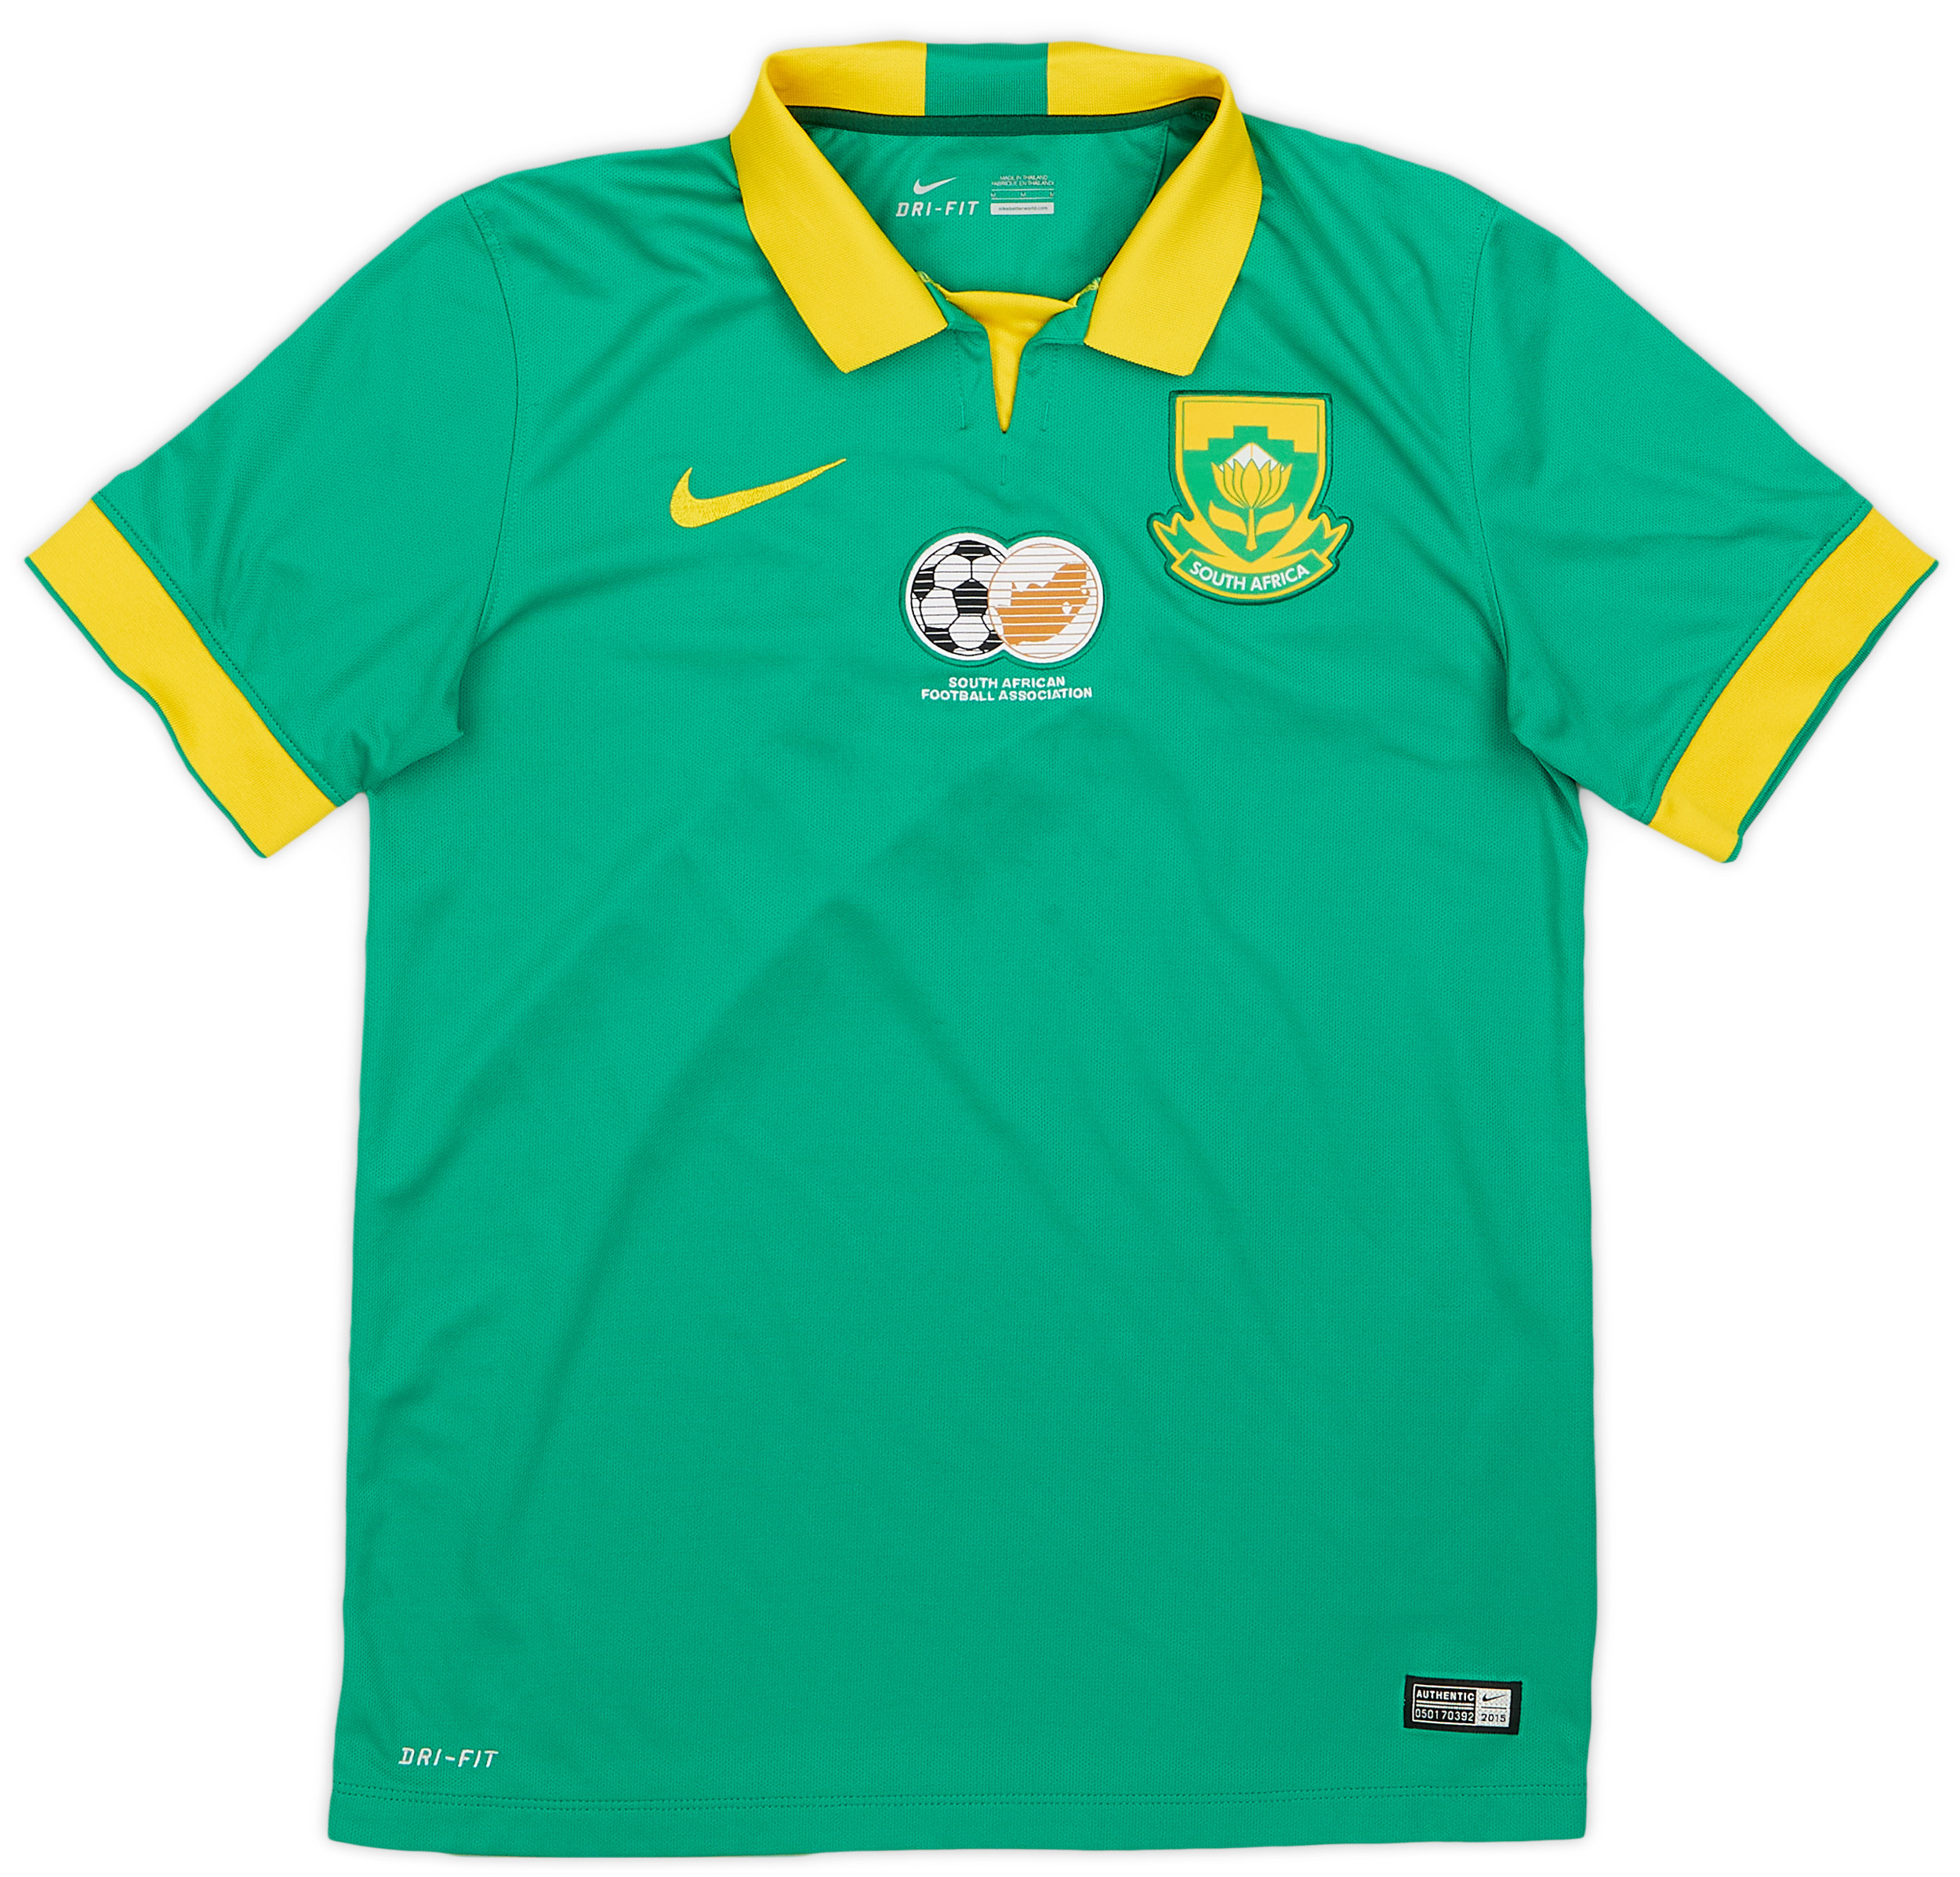 2015 South Africa Away Shirt - 8/10 - ()